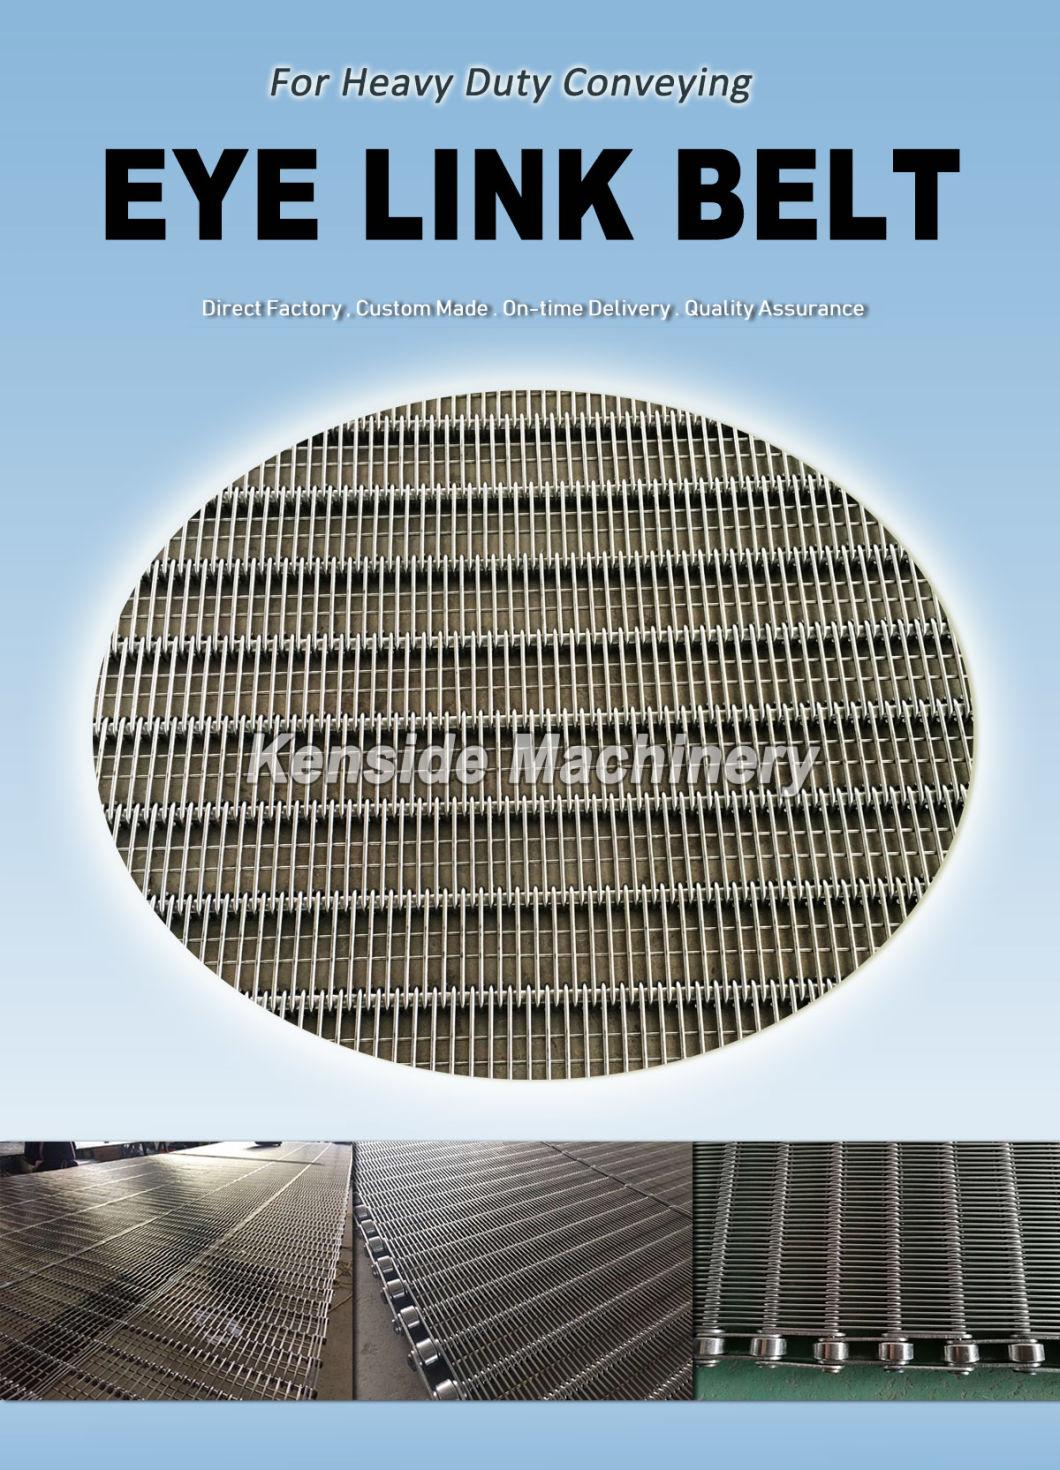 Eye Link Belt for Washing, Drying, Filtering, Sterilizing